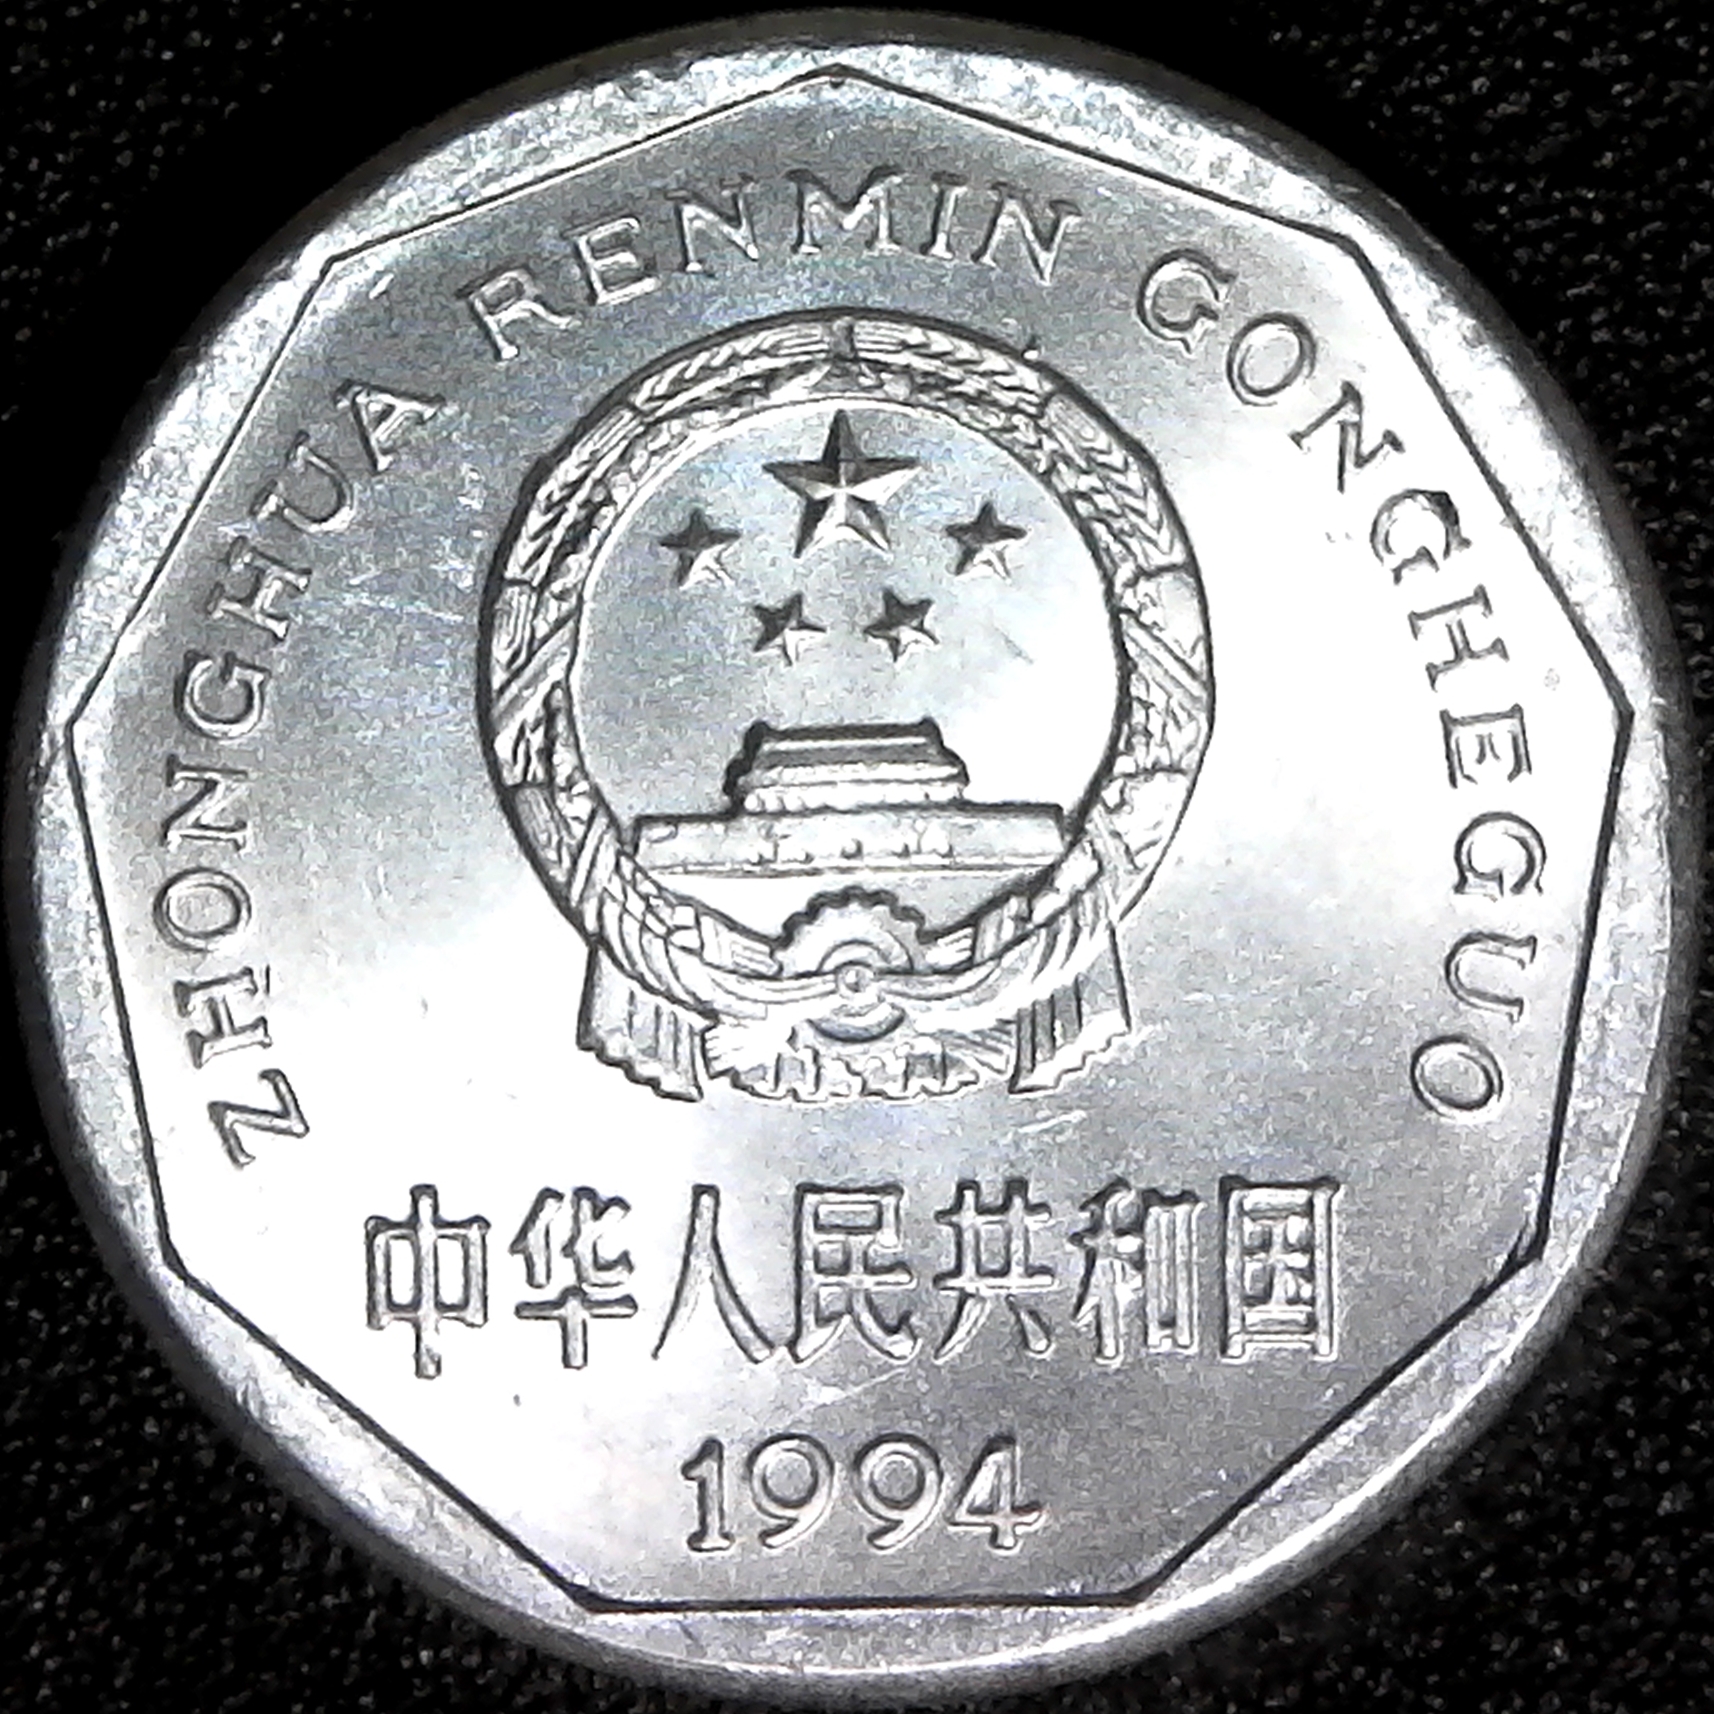 China 1 Jiao 1994 obv.jpg